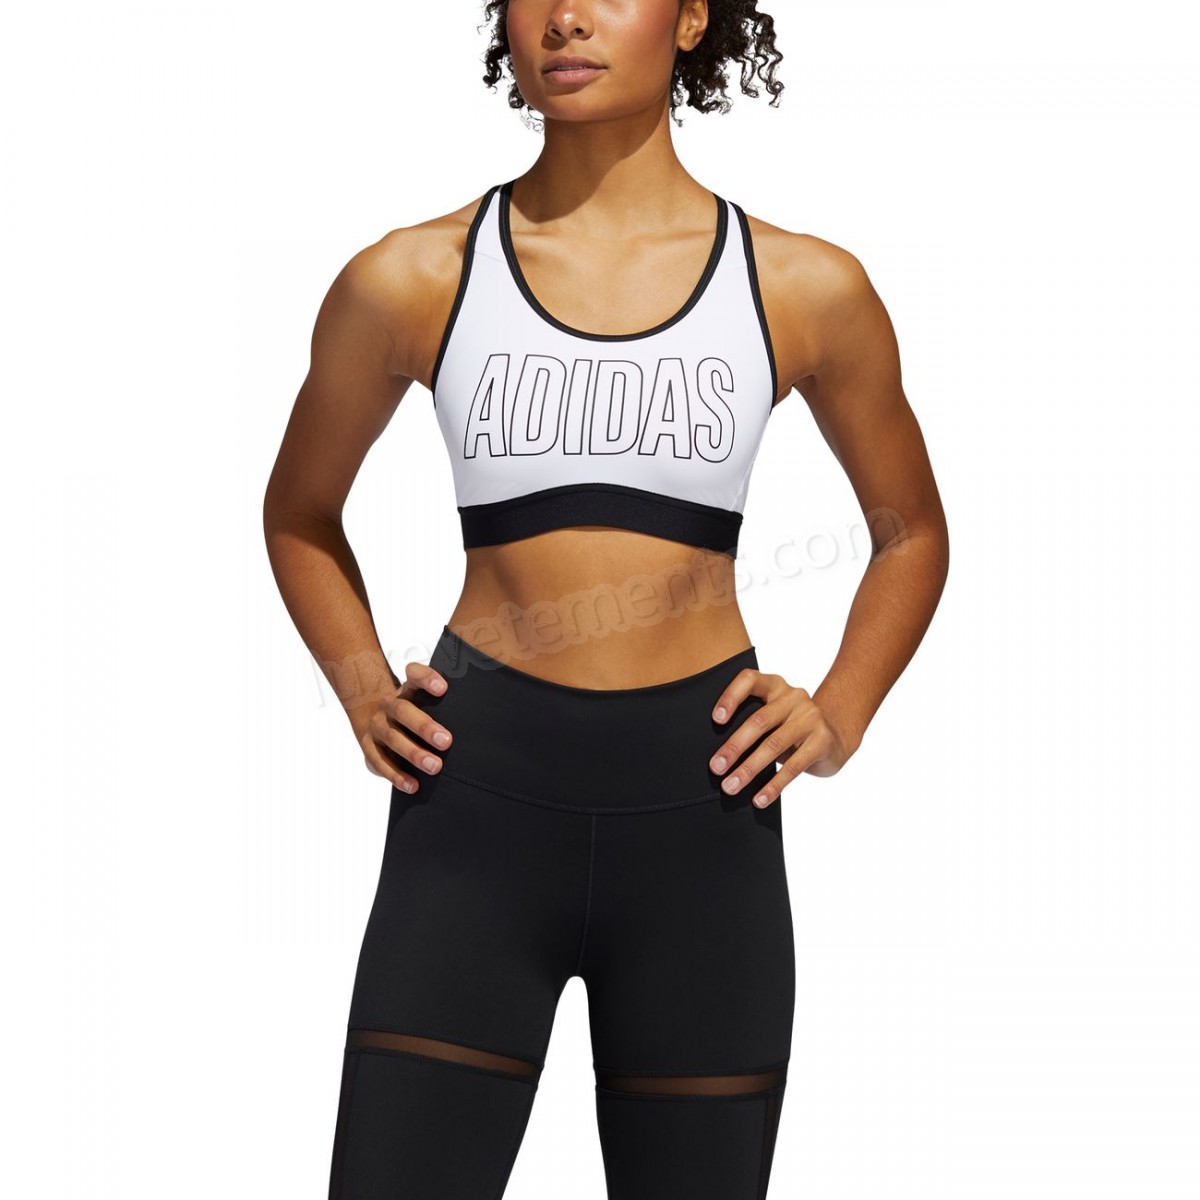 Adidas-Fitness femme ADIDAS Brassière adidas Don't Rest Alphaskin Vente en ligne - -34